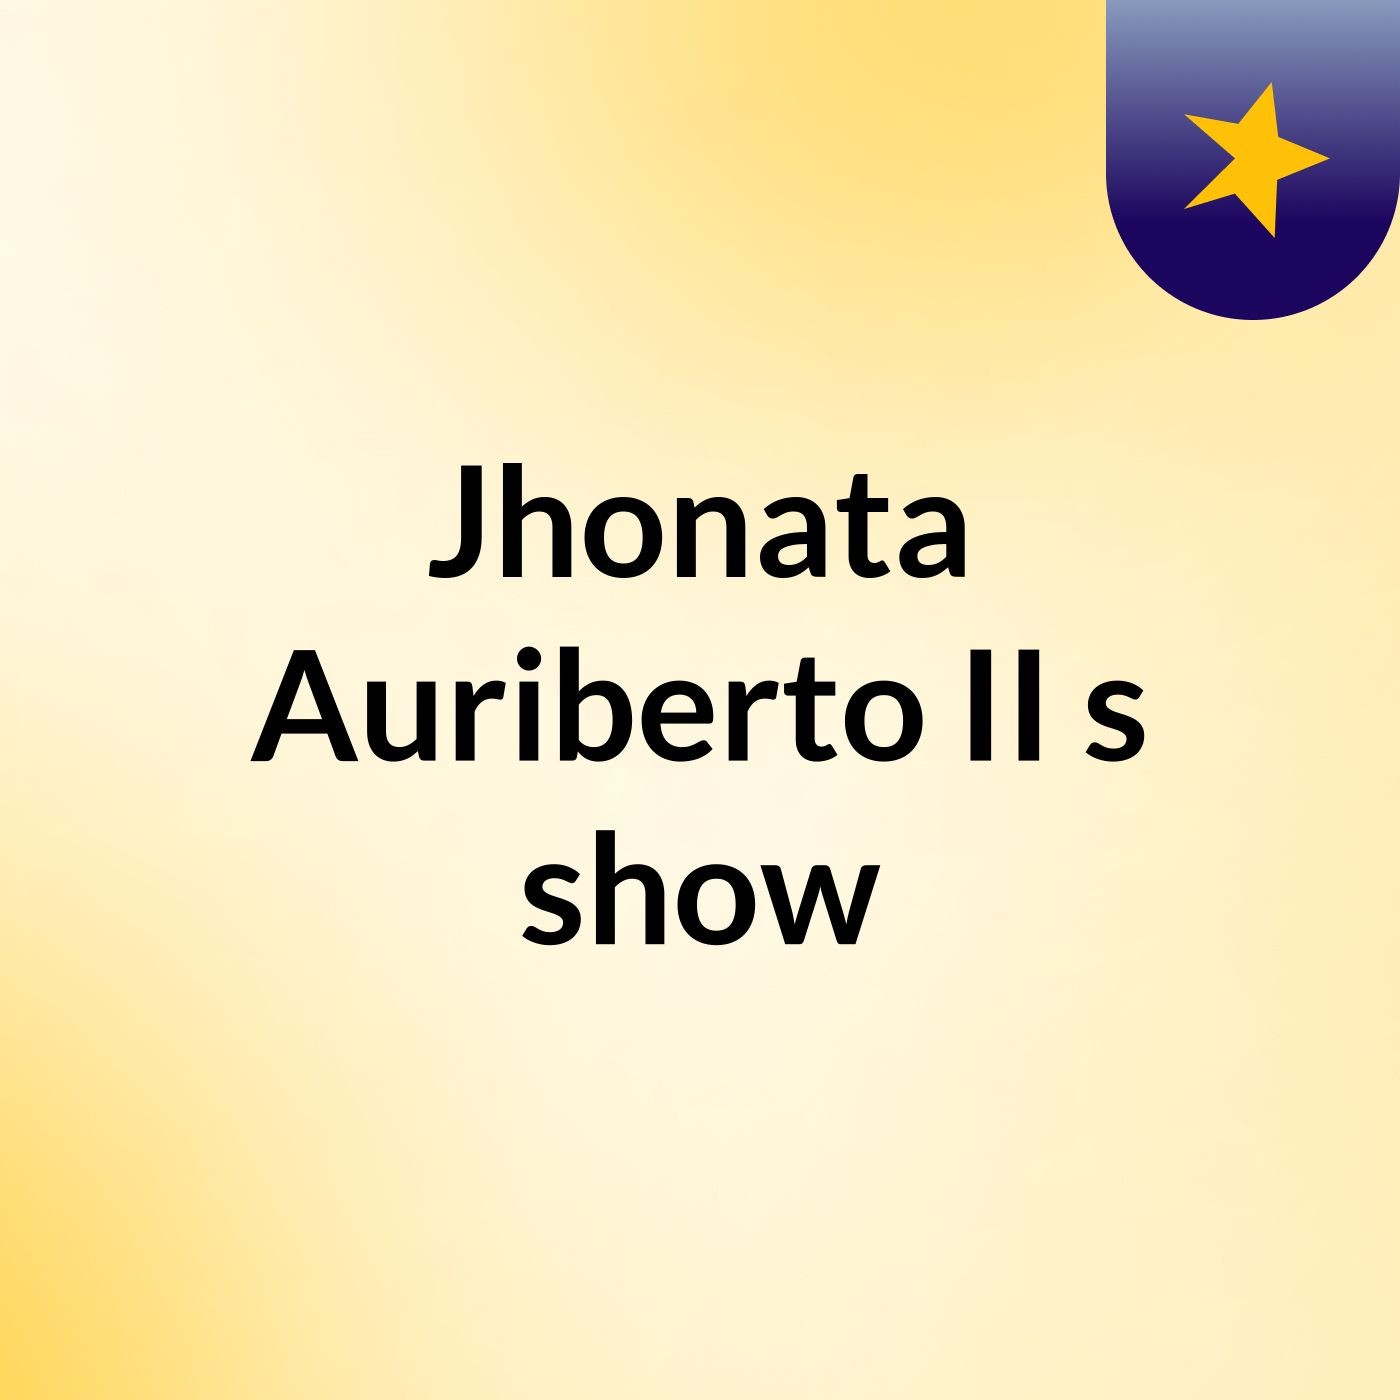 Jhonata Auriberto II's show